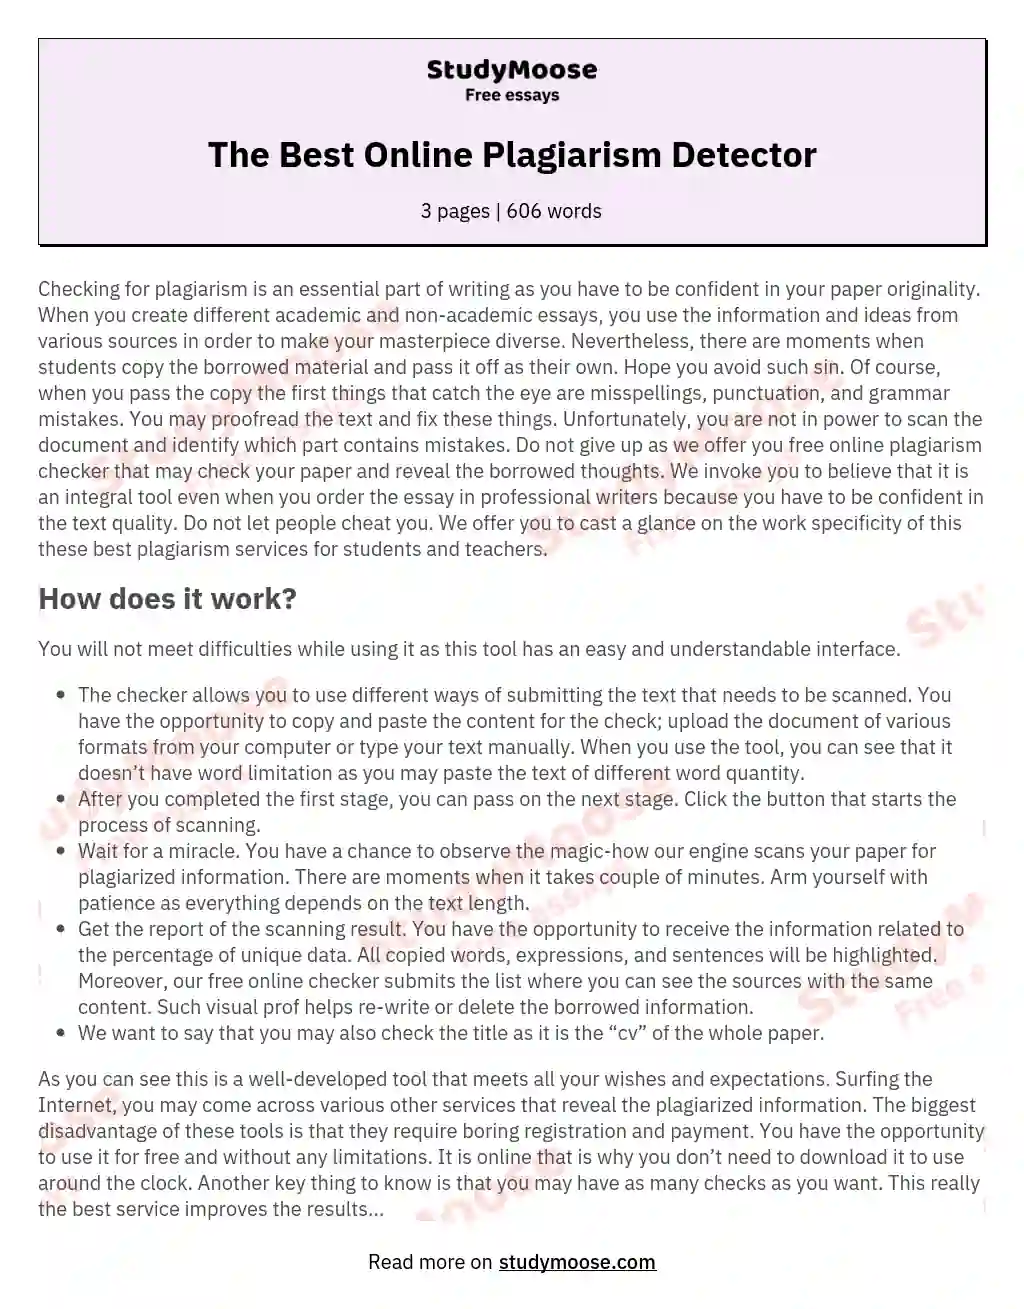 The Best Online Plagiarism Detector essay